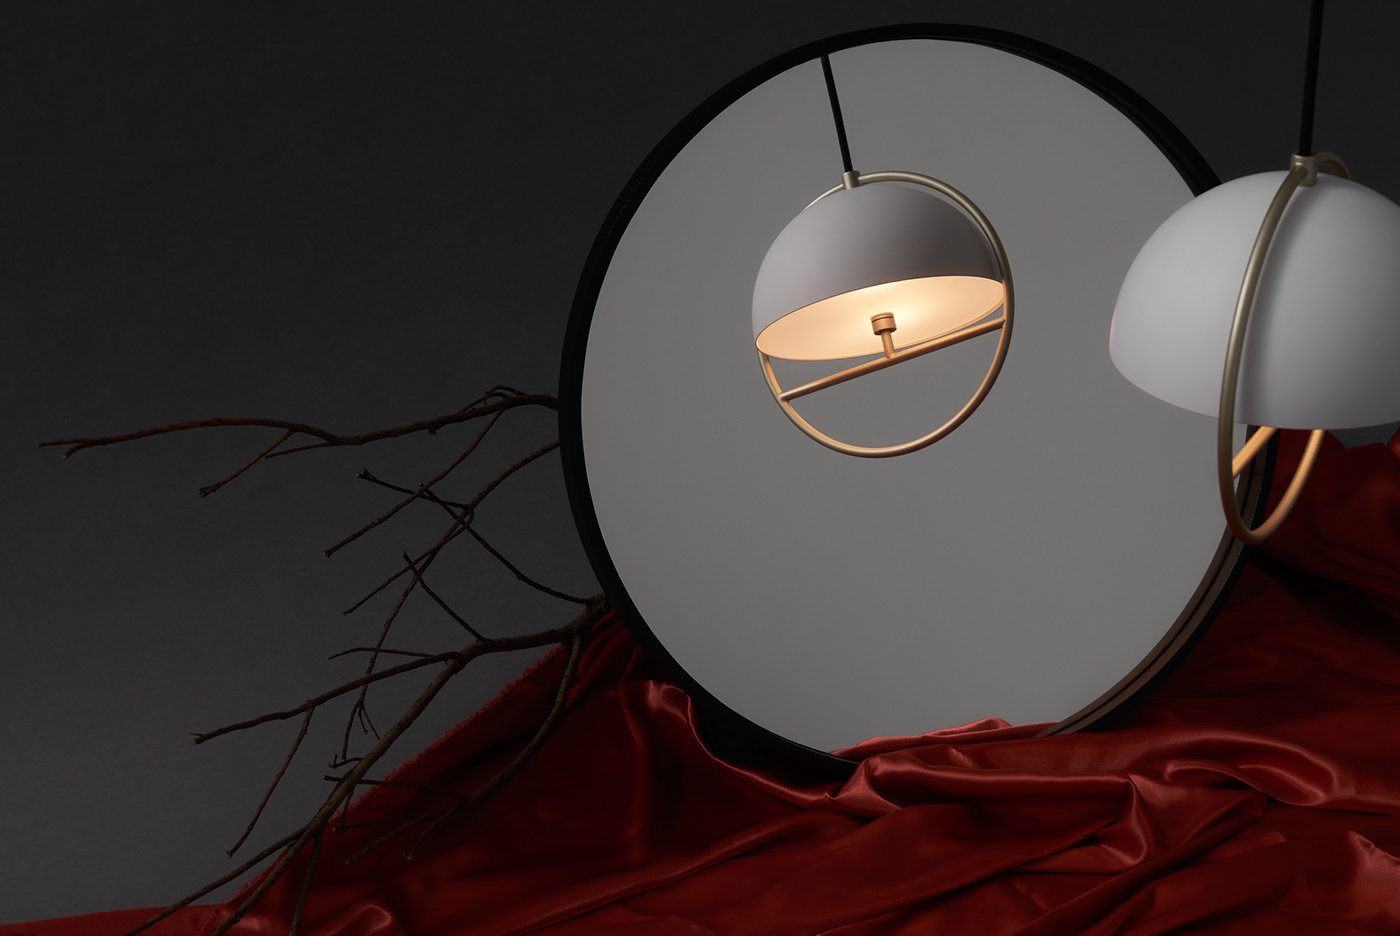 lighting product design  Lamp